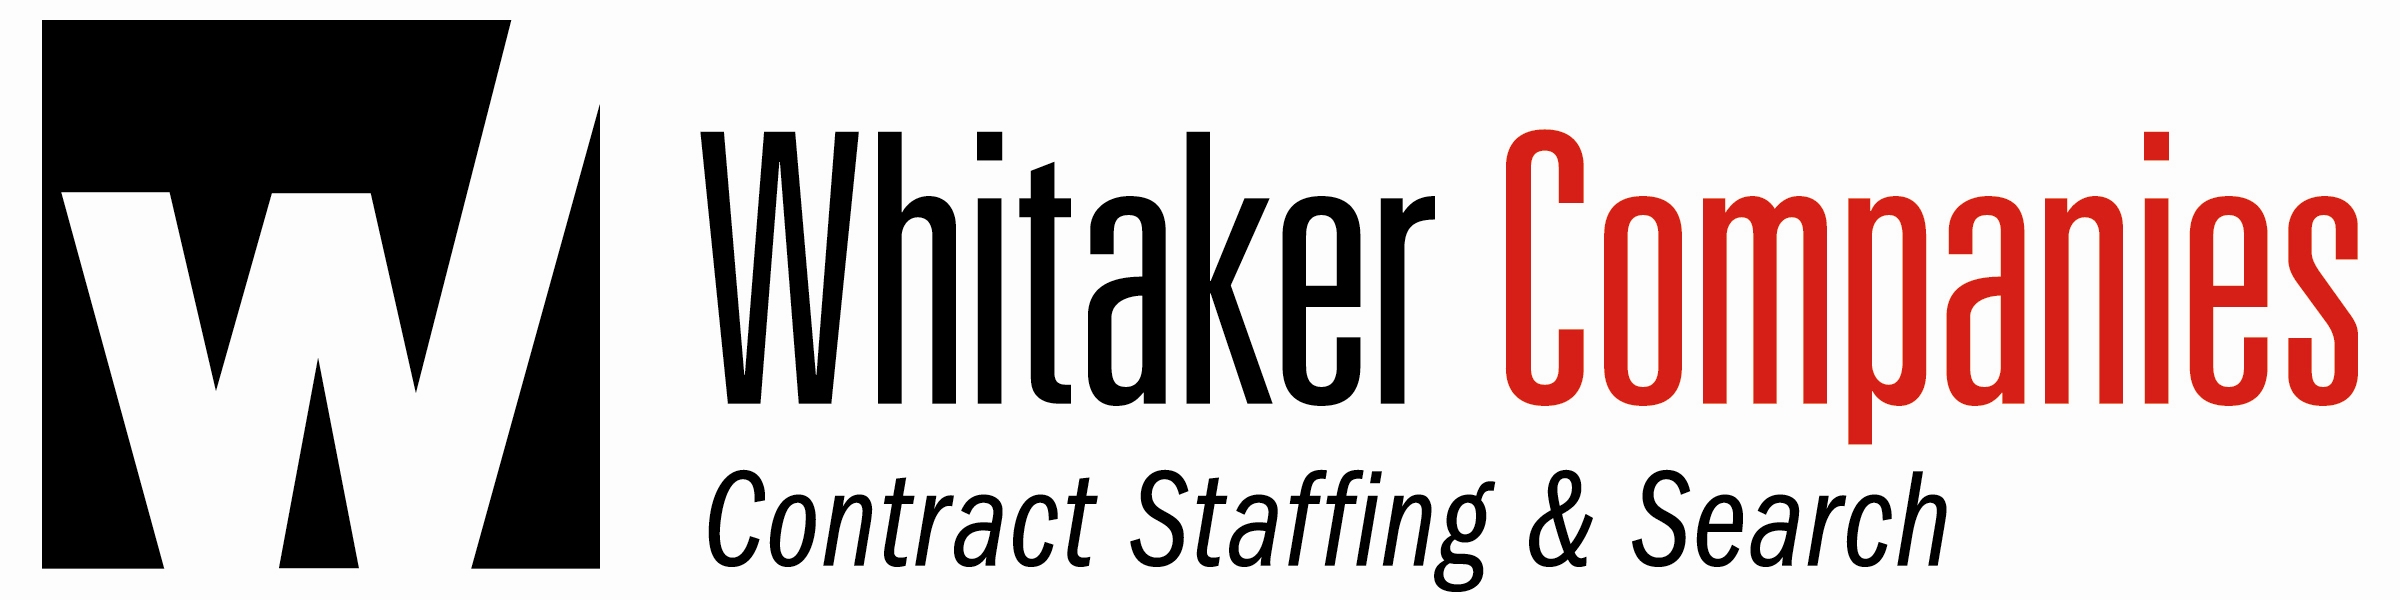 The Whitaker Companies, Inc logo